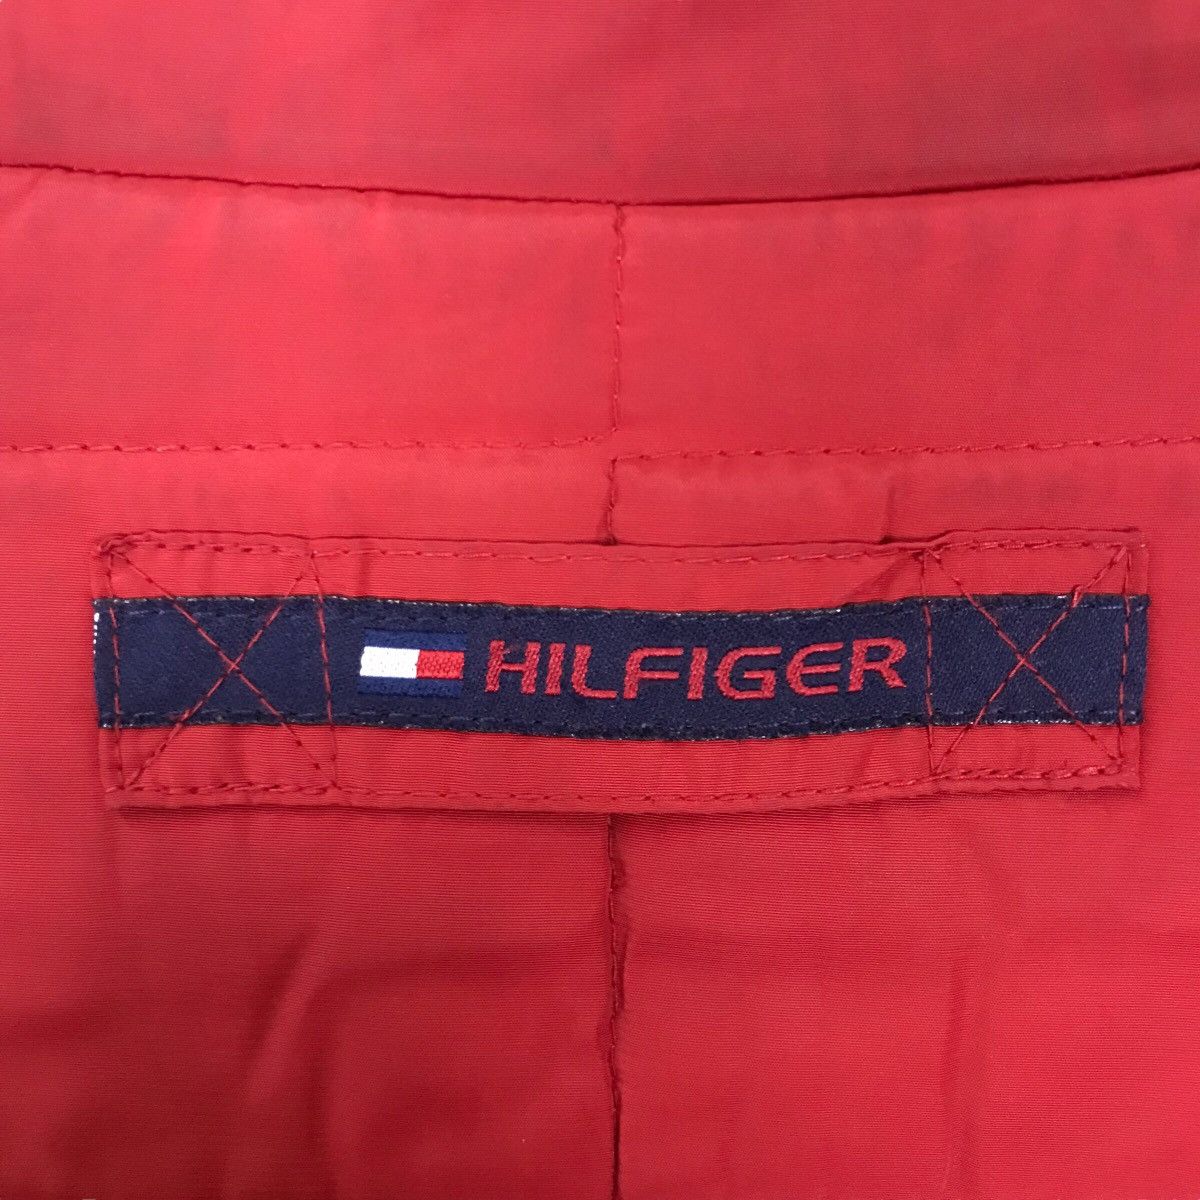 Tommy Hilfiger Vintage Tommy Hilfiger Reversible Puffer Down Jacket Size US M / EU 48-50 / 2 - 8 Thumbnail